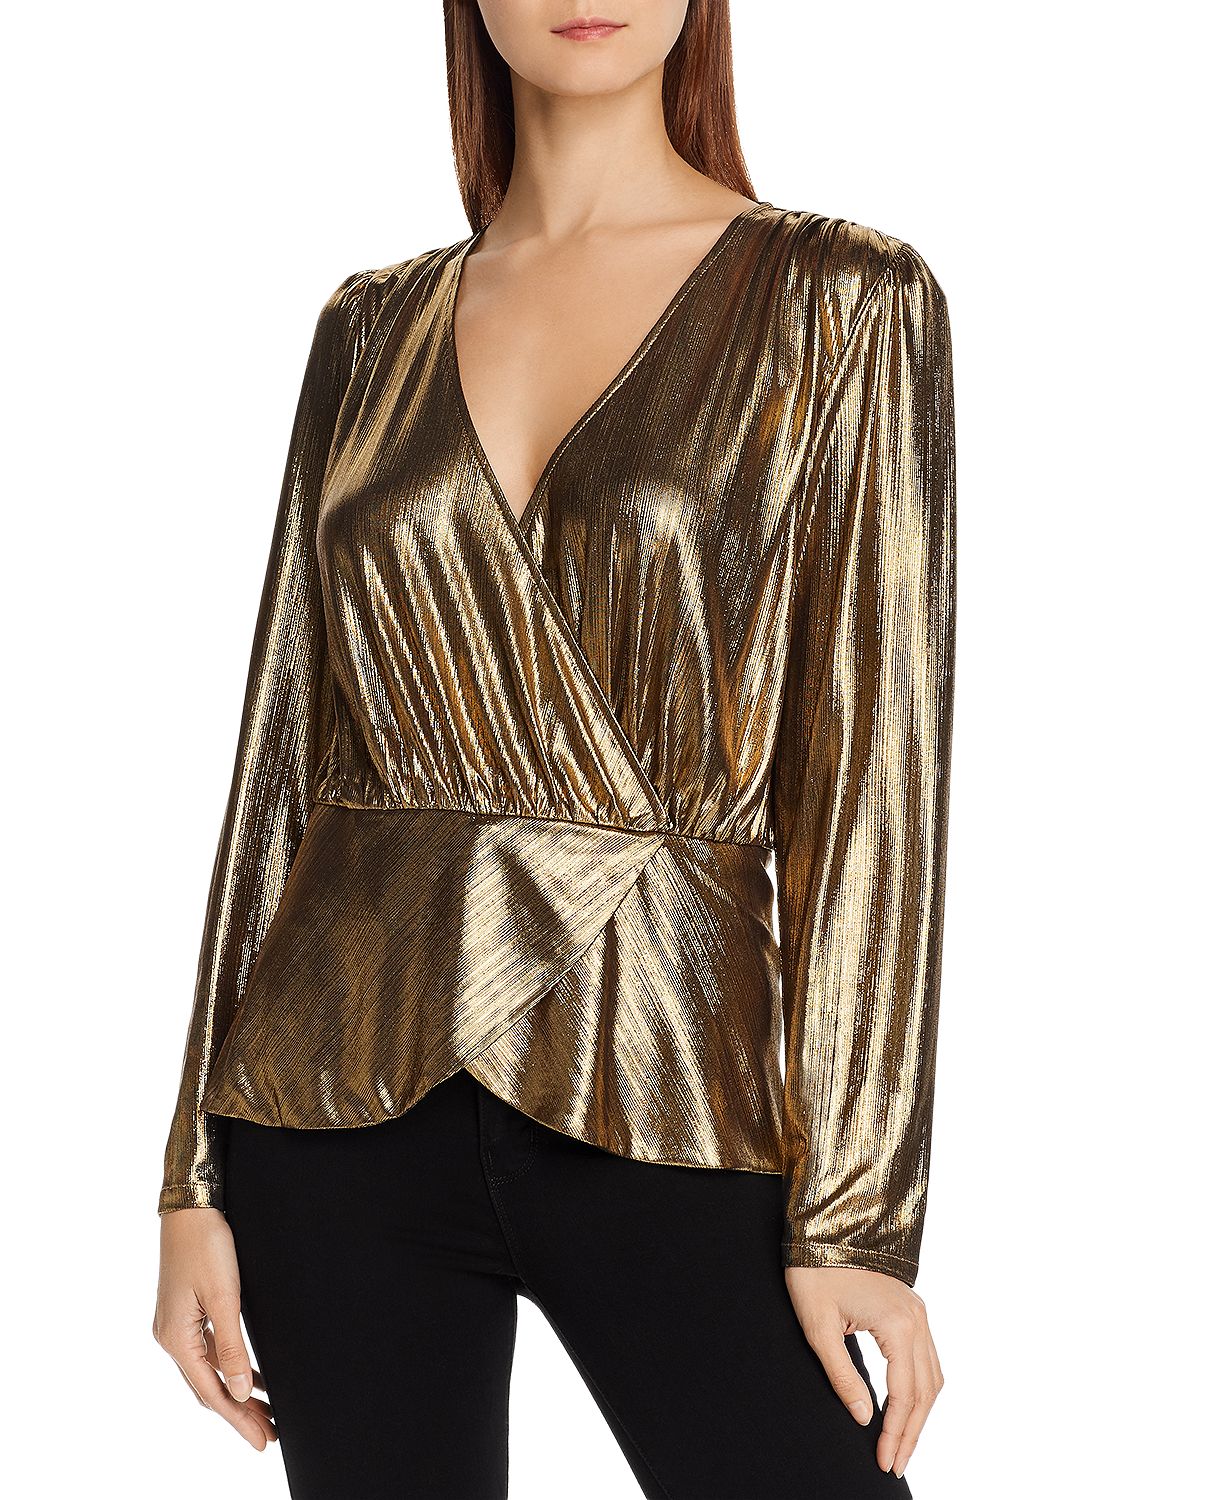 woocommerce-673321-2209615.cloudwaysapps.com-lini-womens-gold-metallic-alexandra-lame-wrap-top-blouse